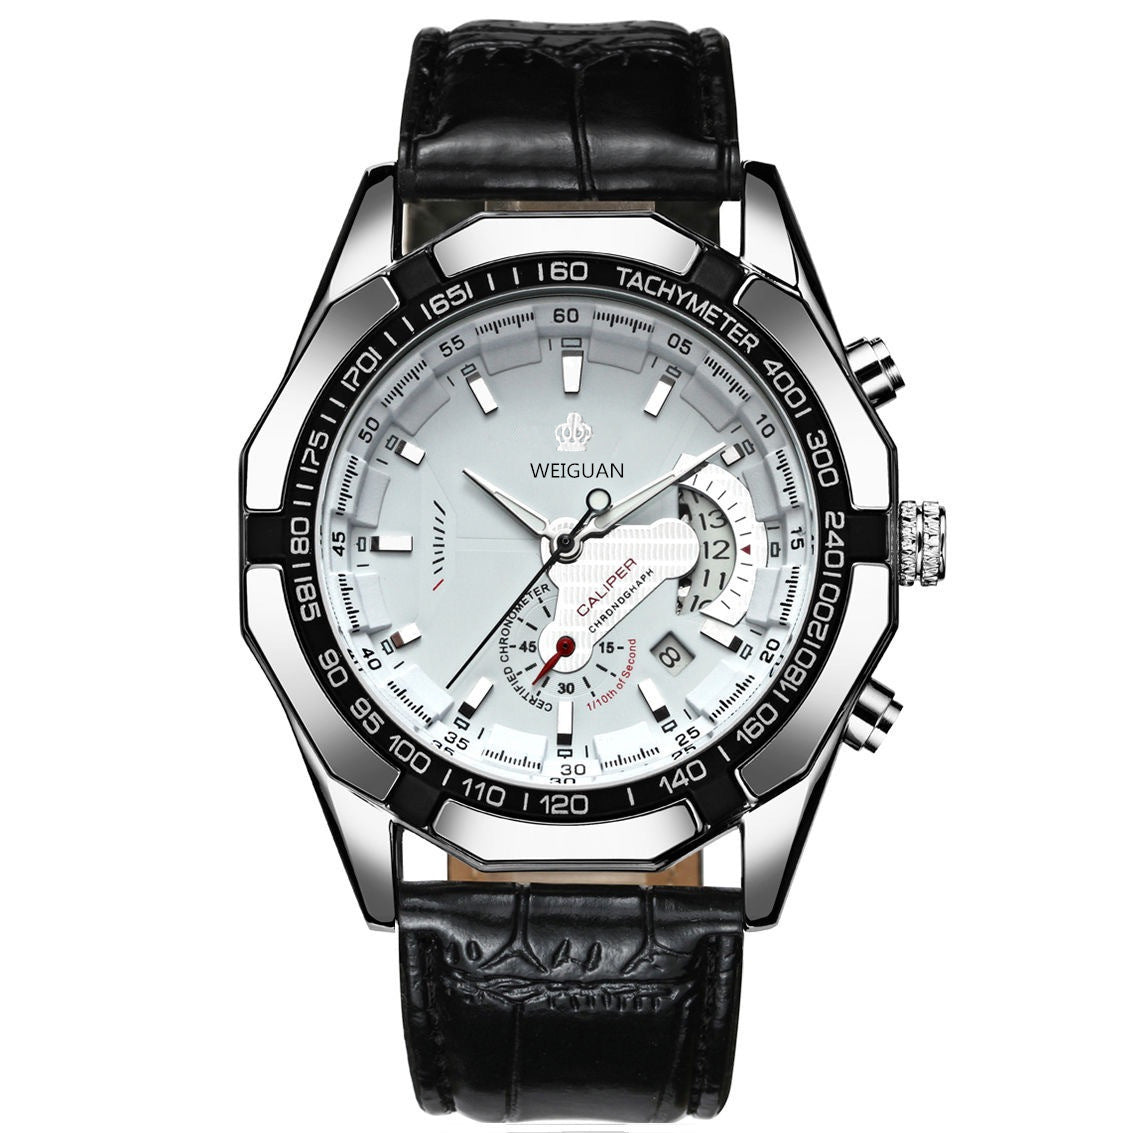 Automatic Movement Watch Men's Non-mechanical Watch